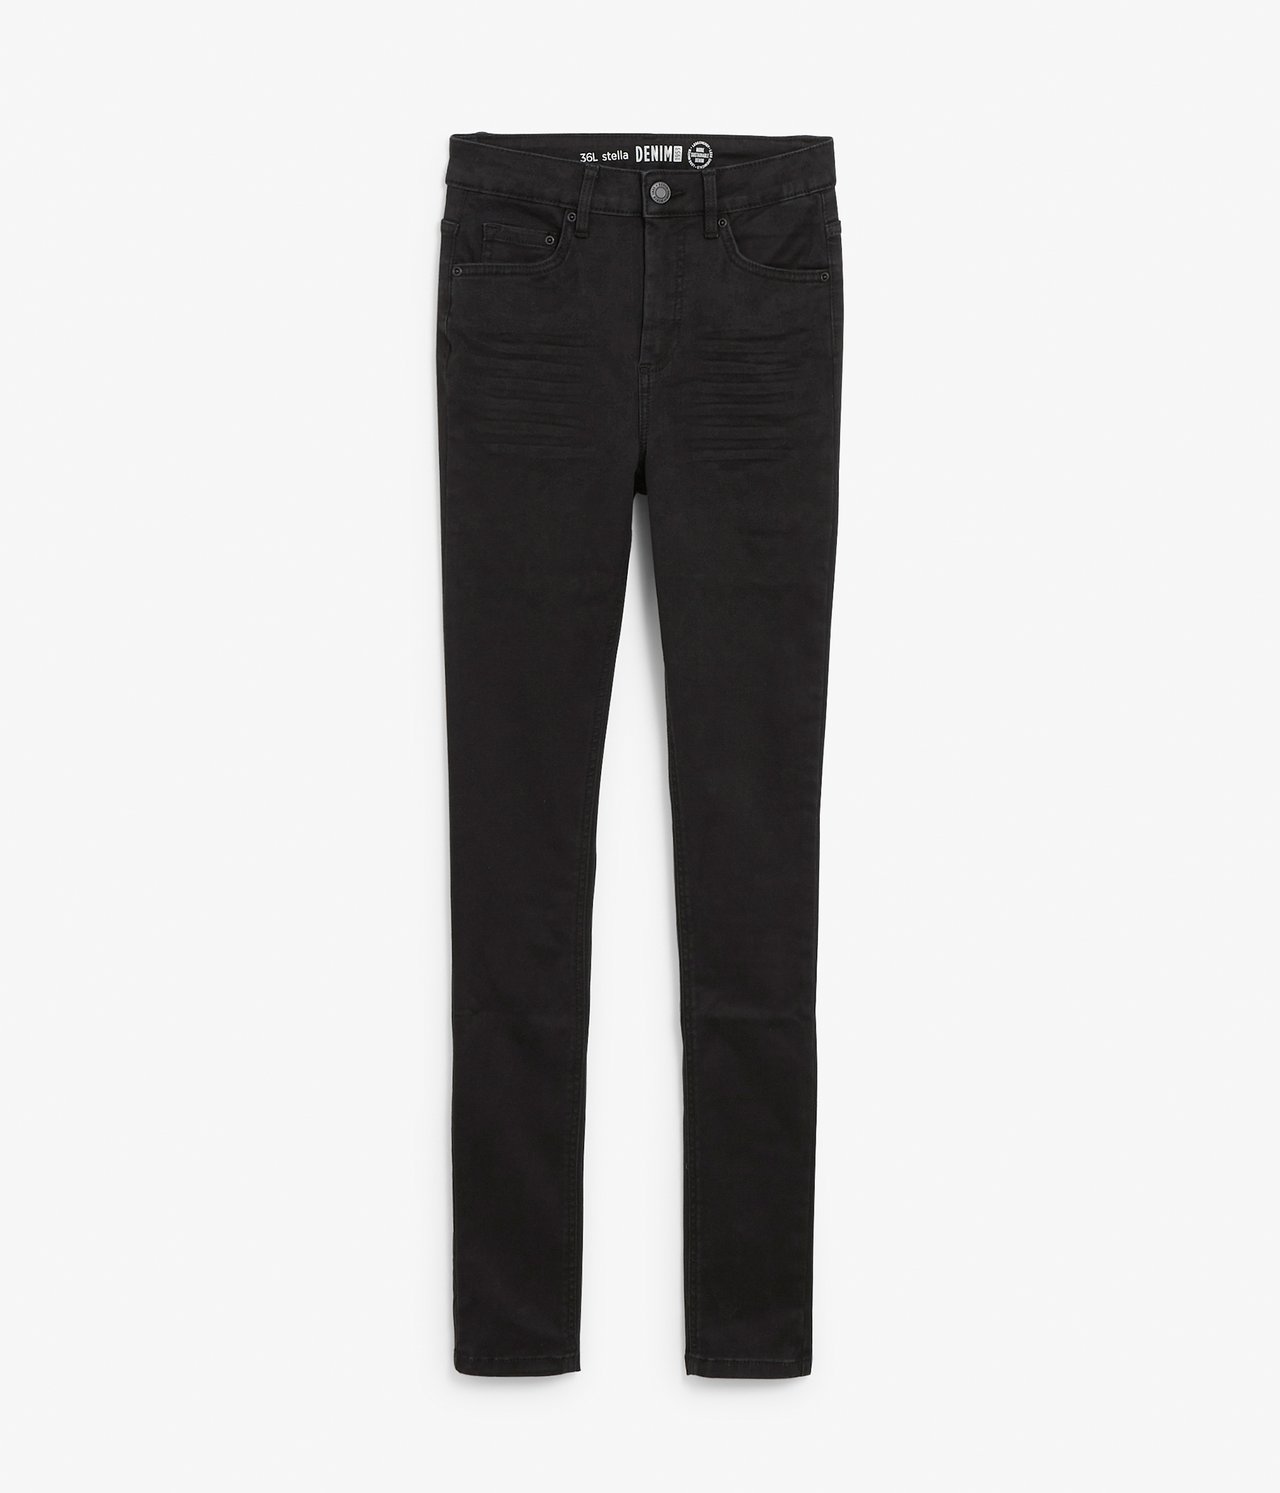 Super slim jeans extra long leg - Svart - 5